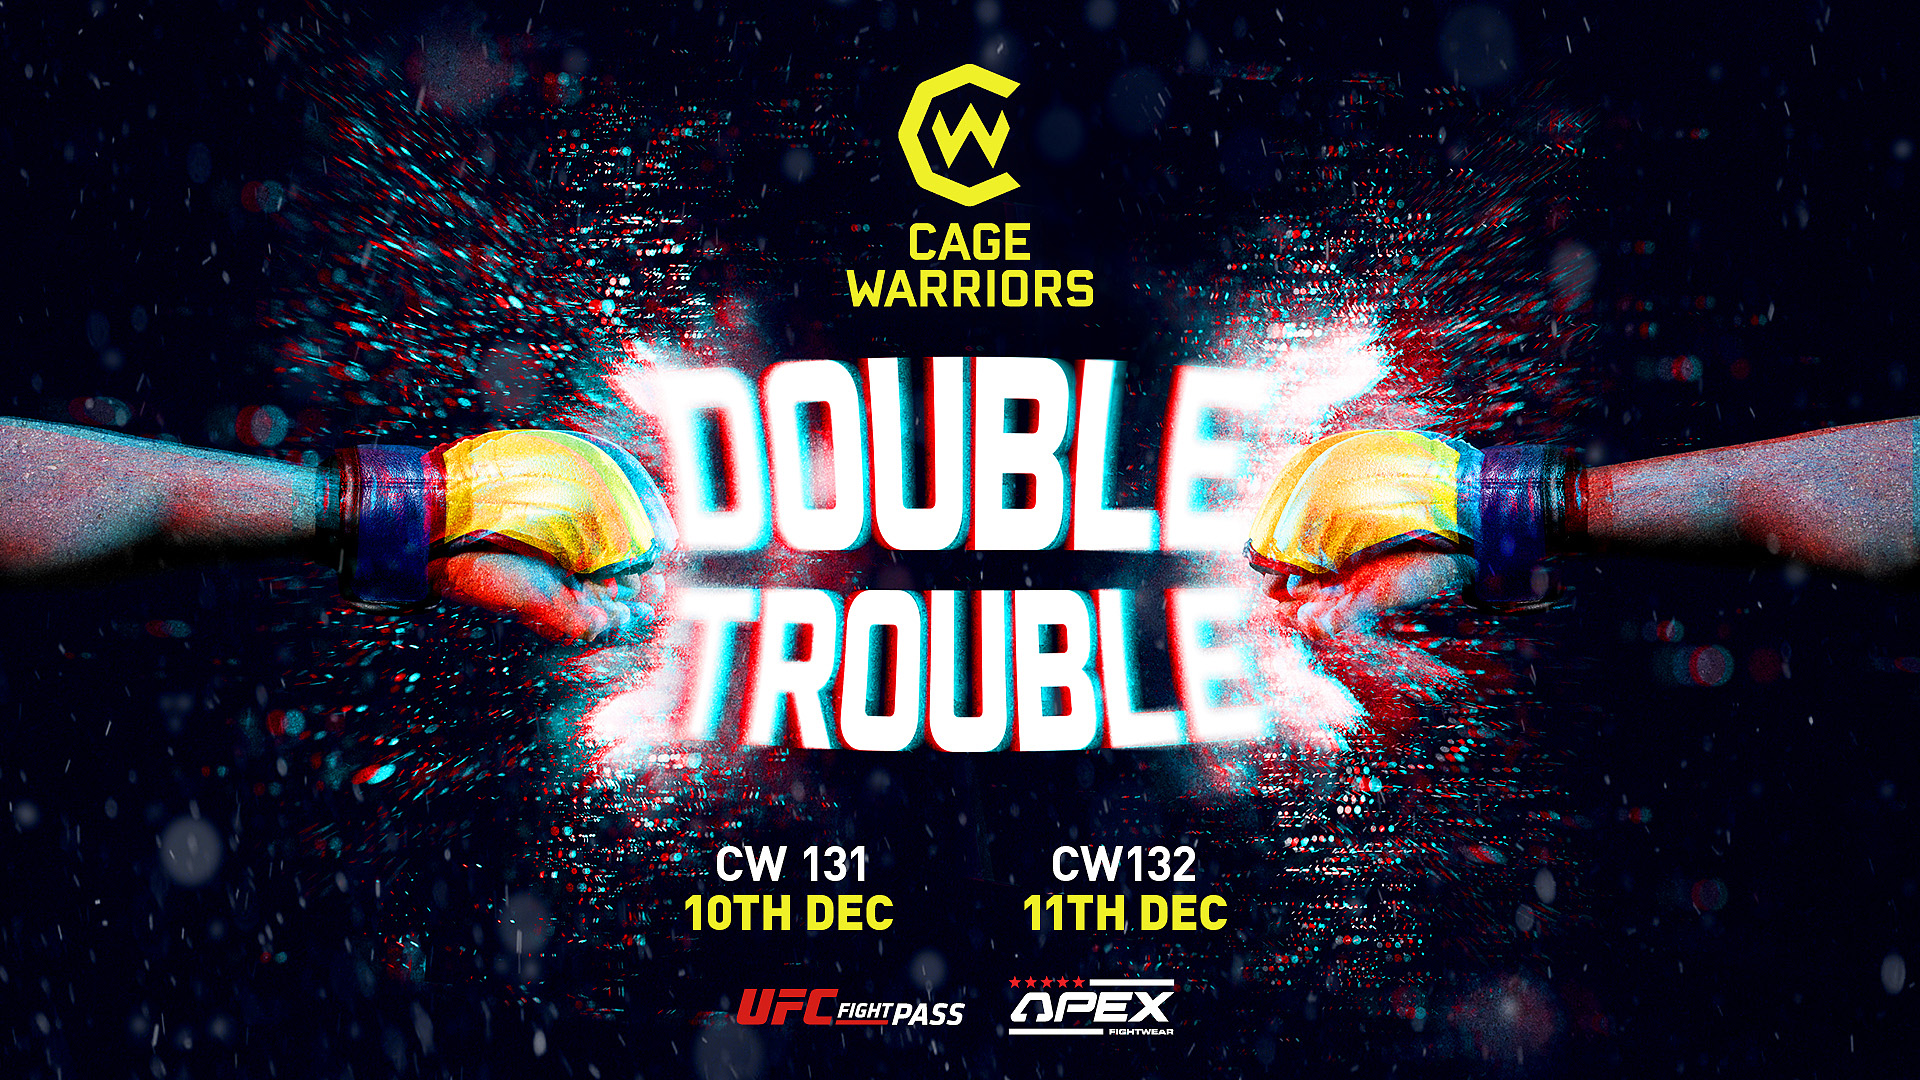 Cage Warriors 132